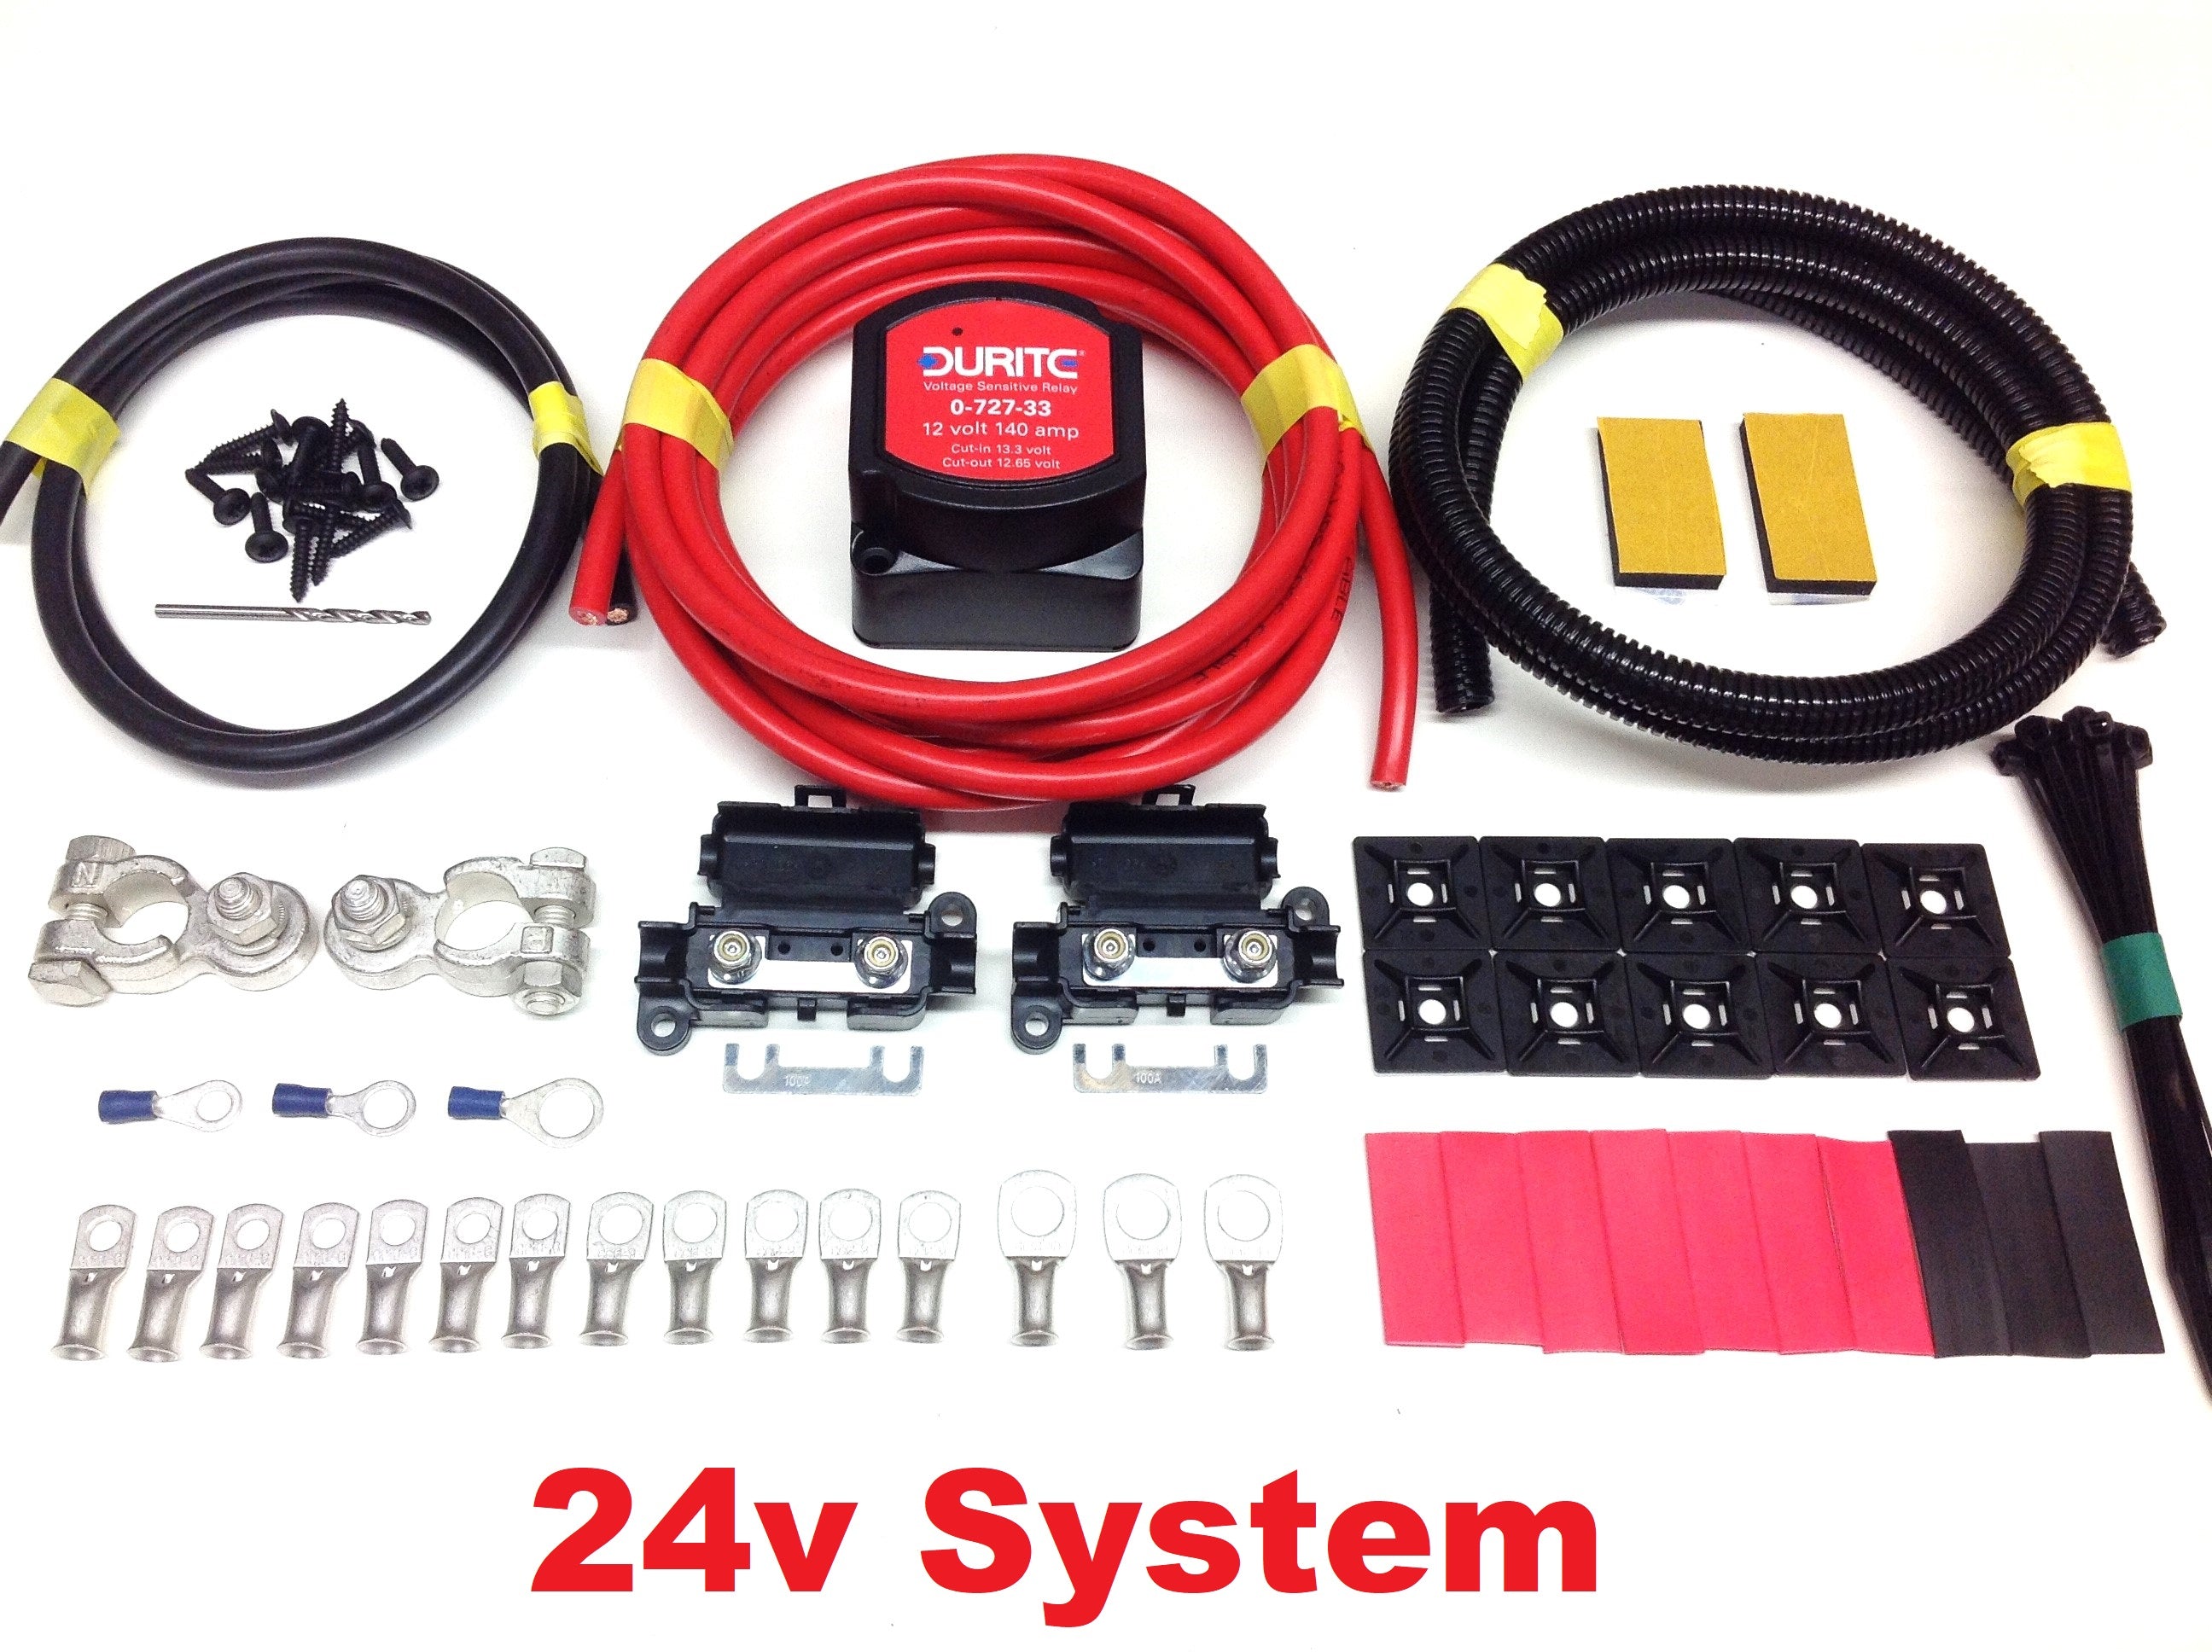 Split Charge Kit with 24V Durite 140amp VSR + 110amp 16mm2 Cable